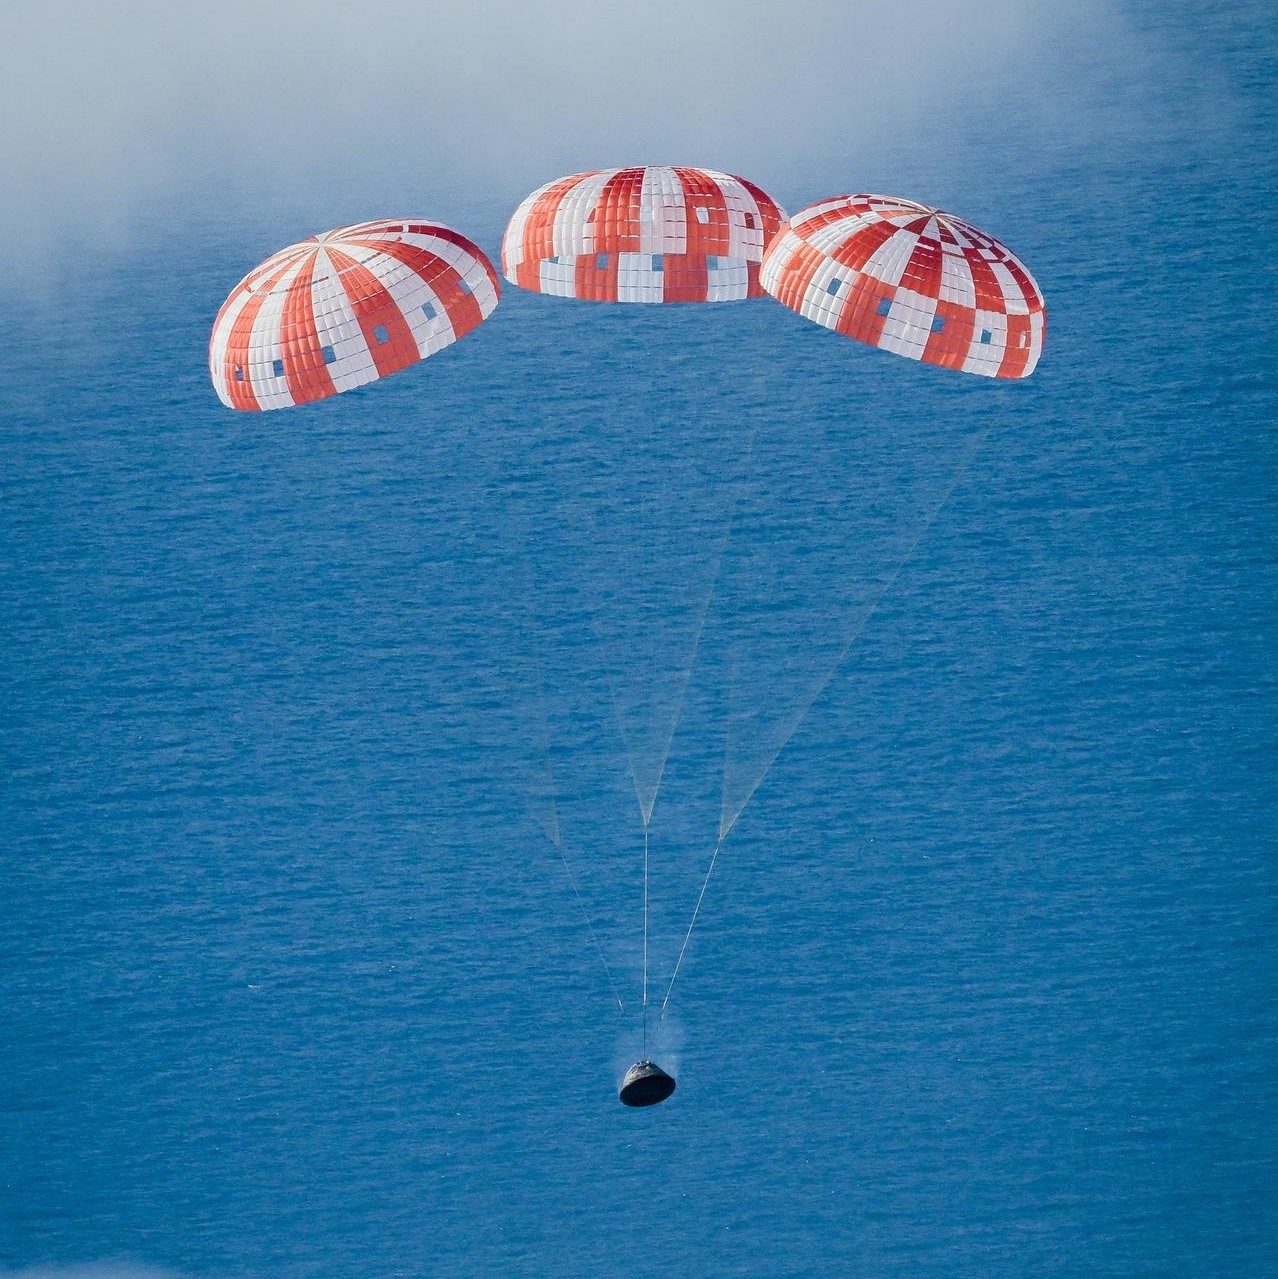 Orion under three opened parachutes descending toward the ocean for splashdown